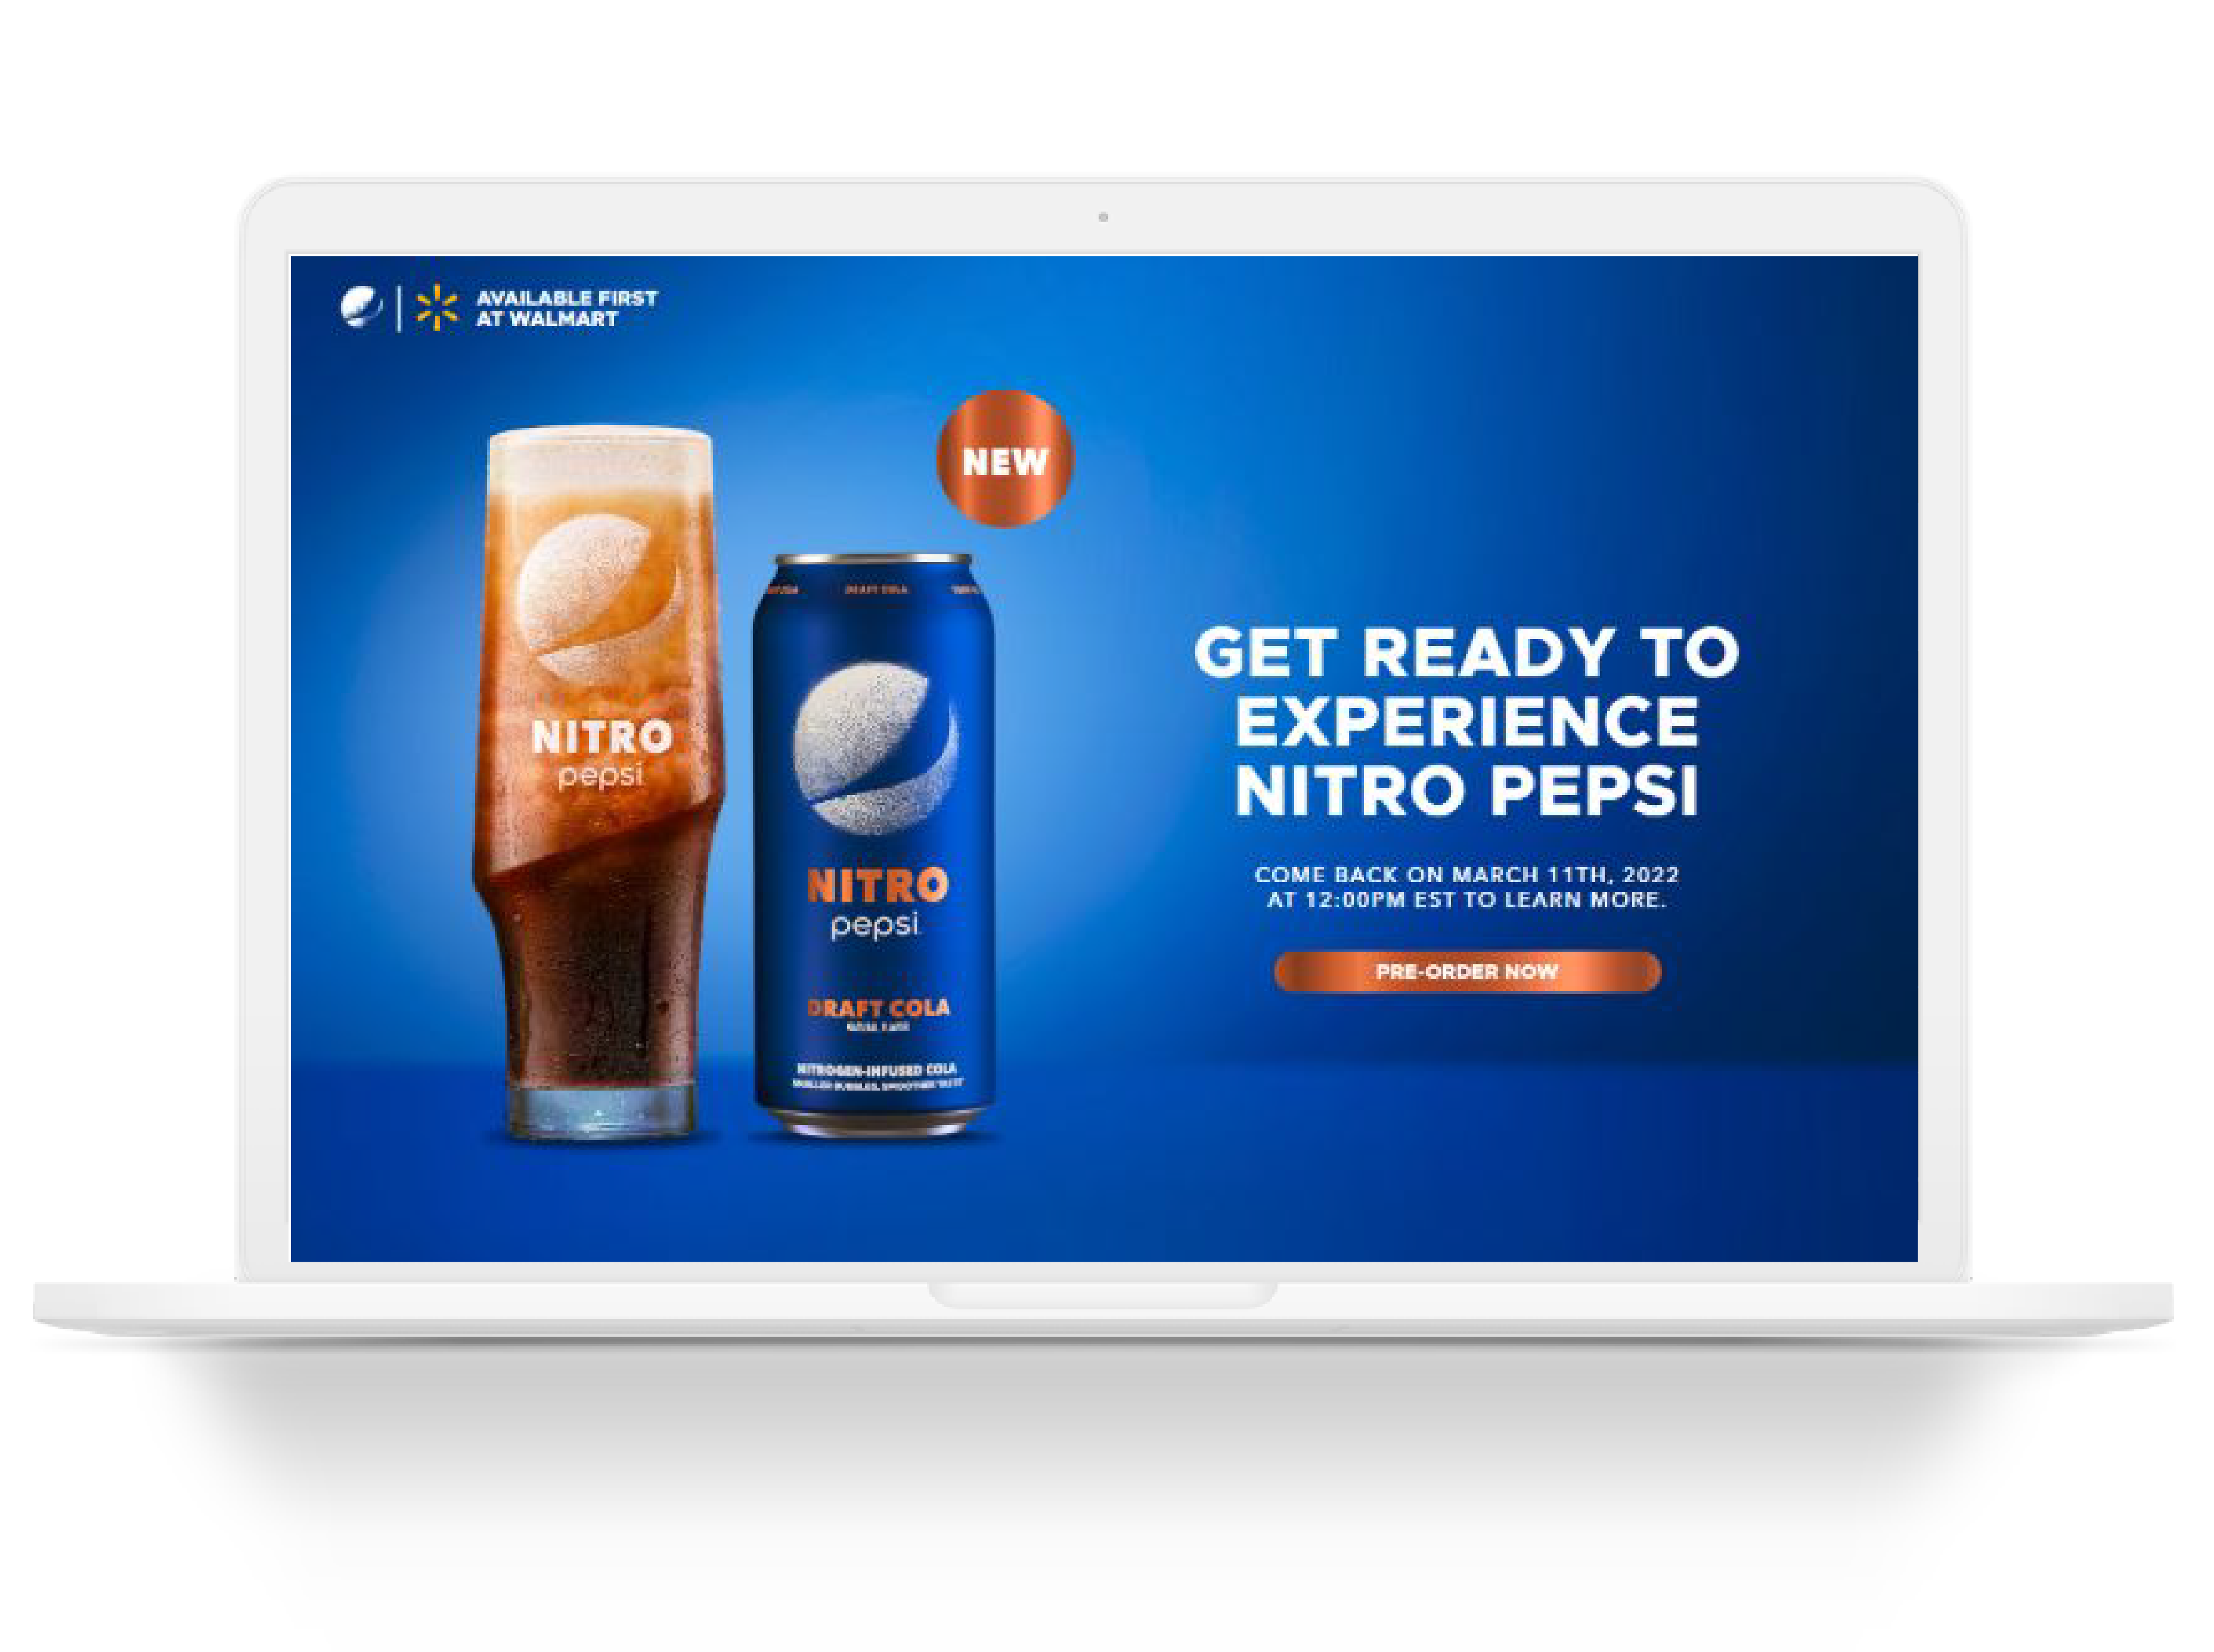 Nitro Pepsi Promotional Campaign